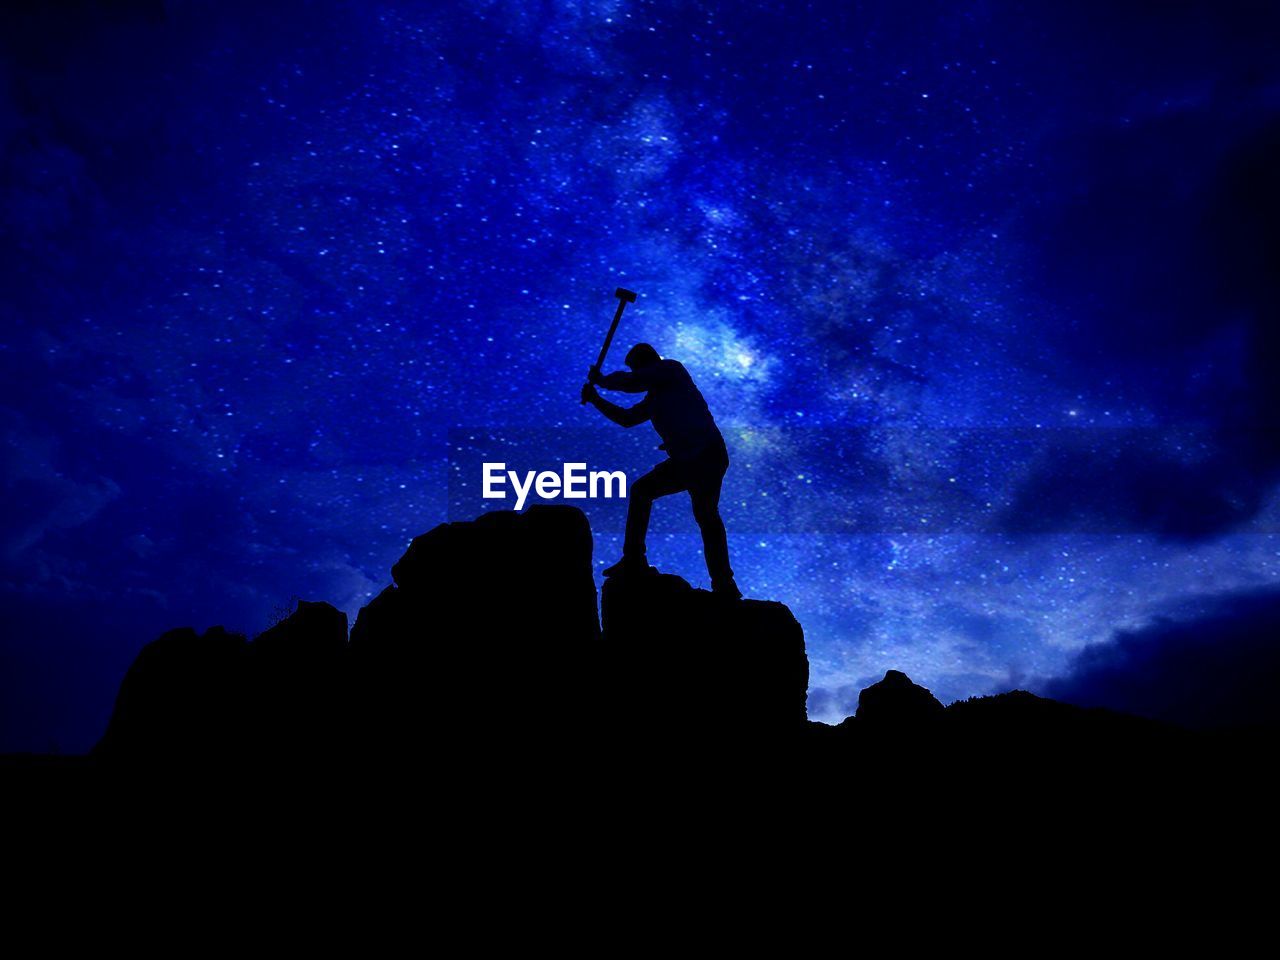 Silhouette man hammering rock against star field at night